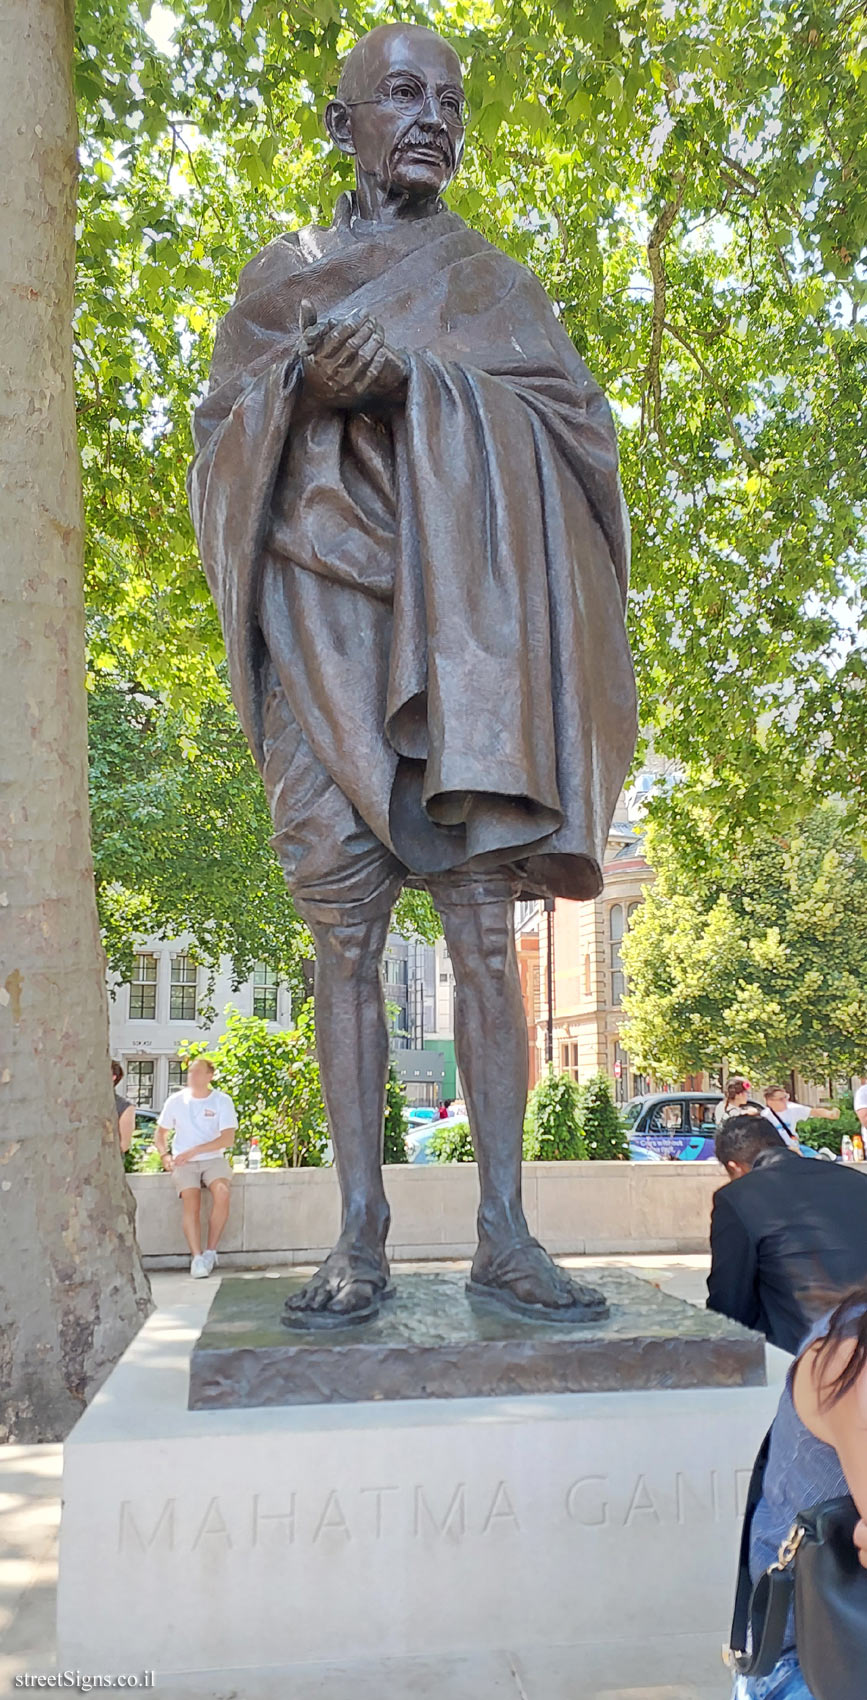 London - Statue of Mahatma Gandhi - Parliament Square, SW1, London, UK